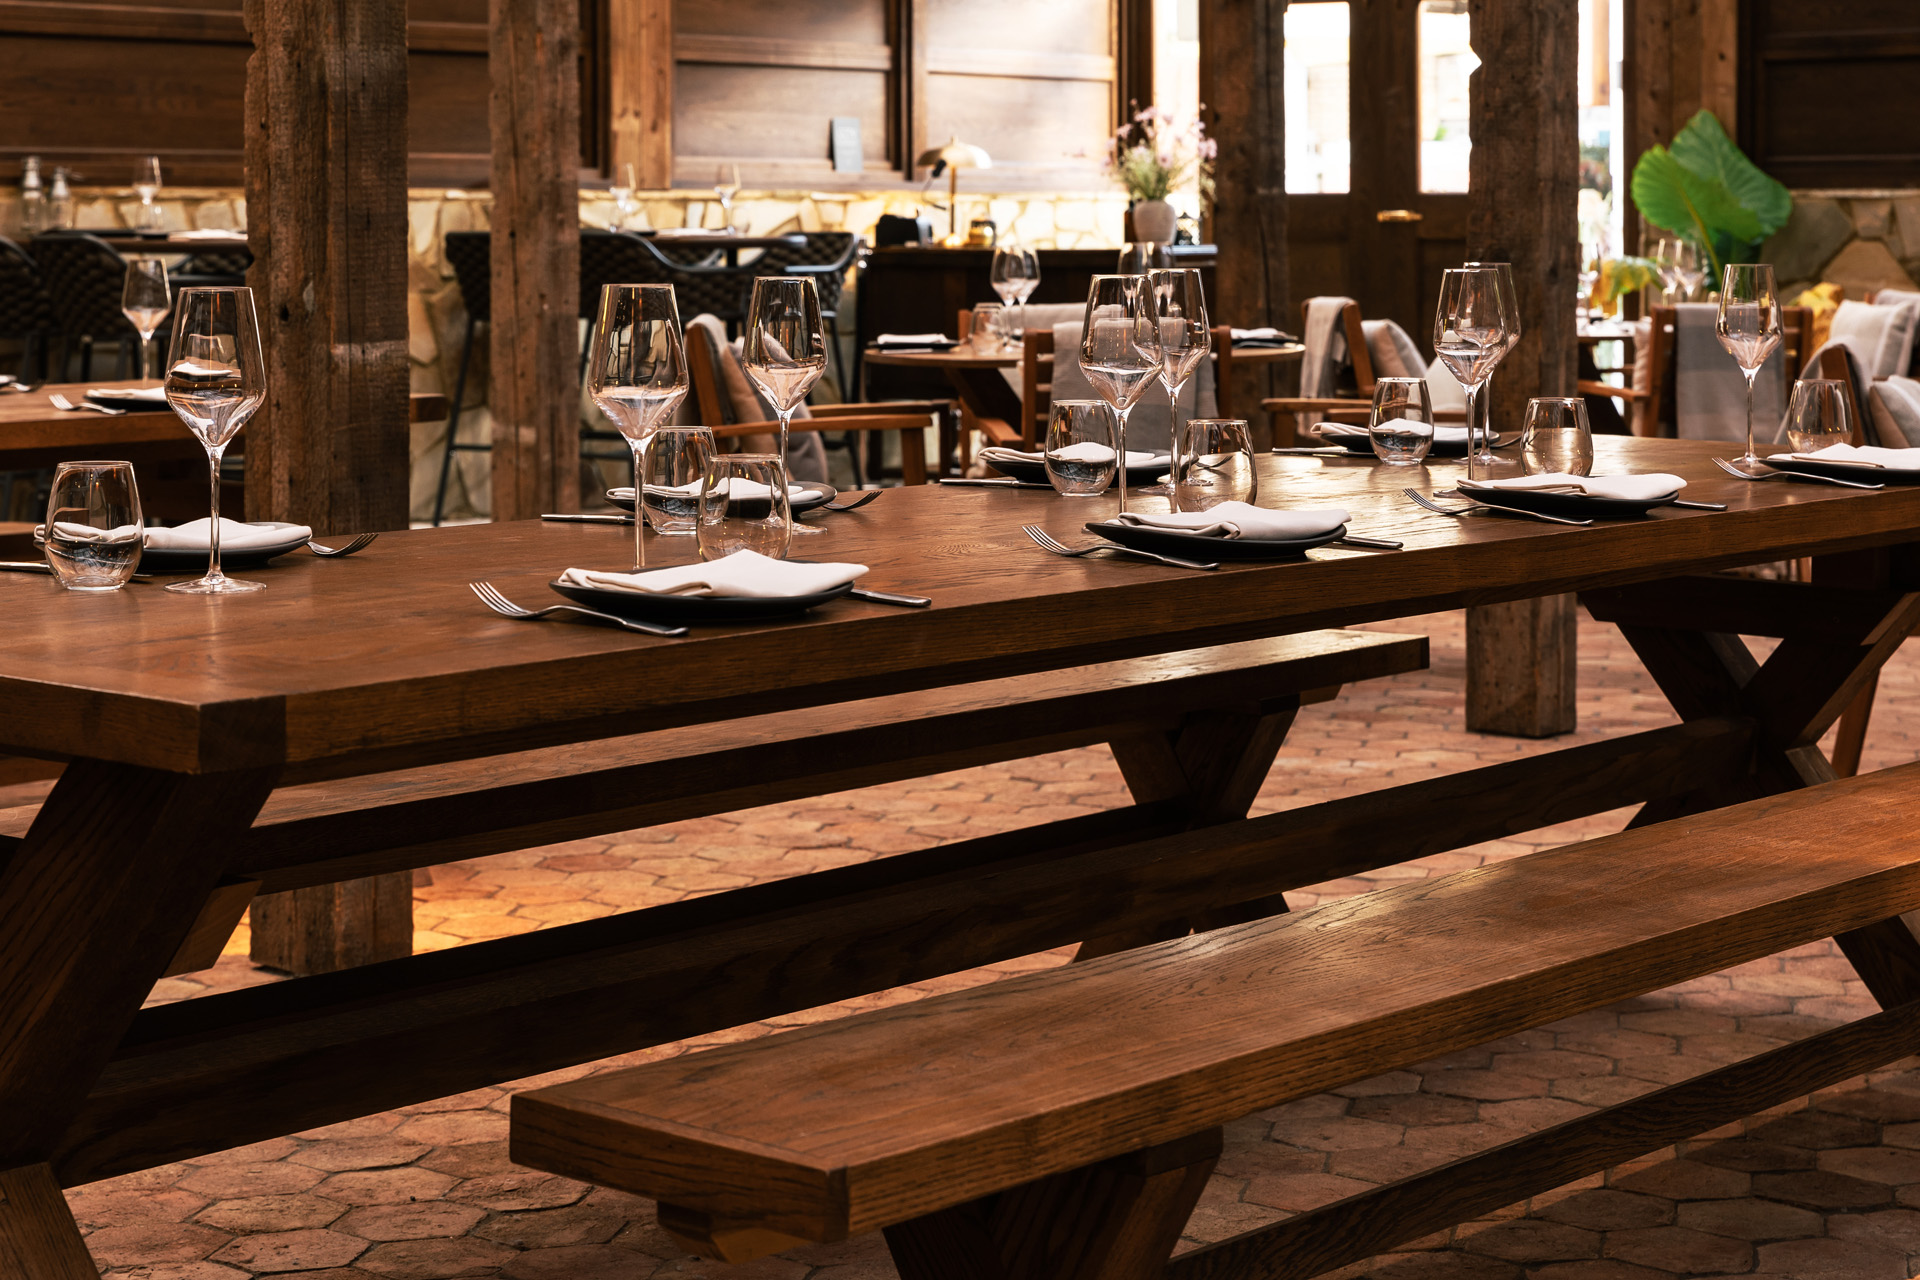 Tables inside In Horto